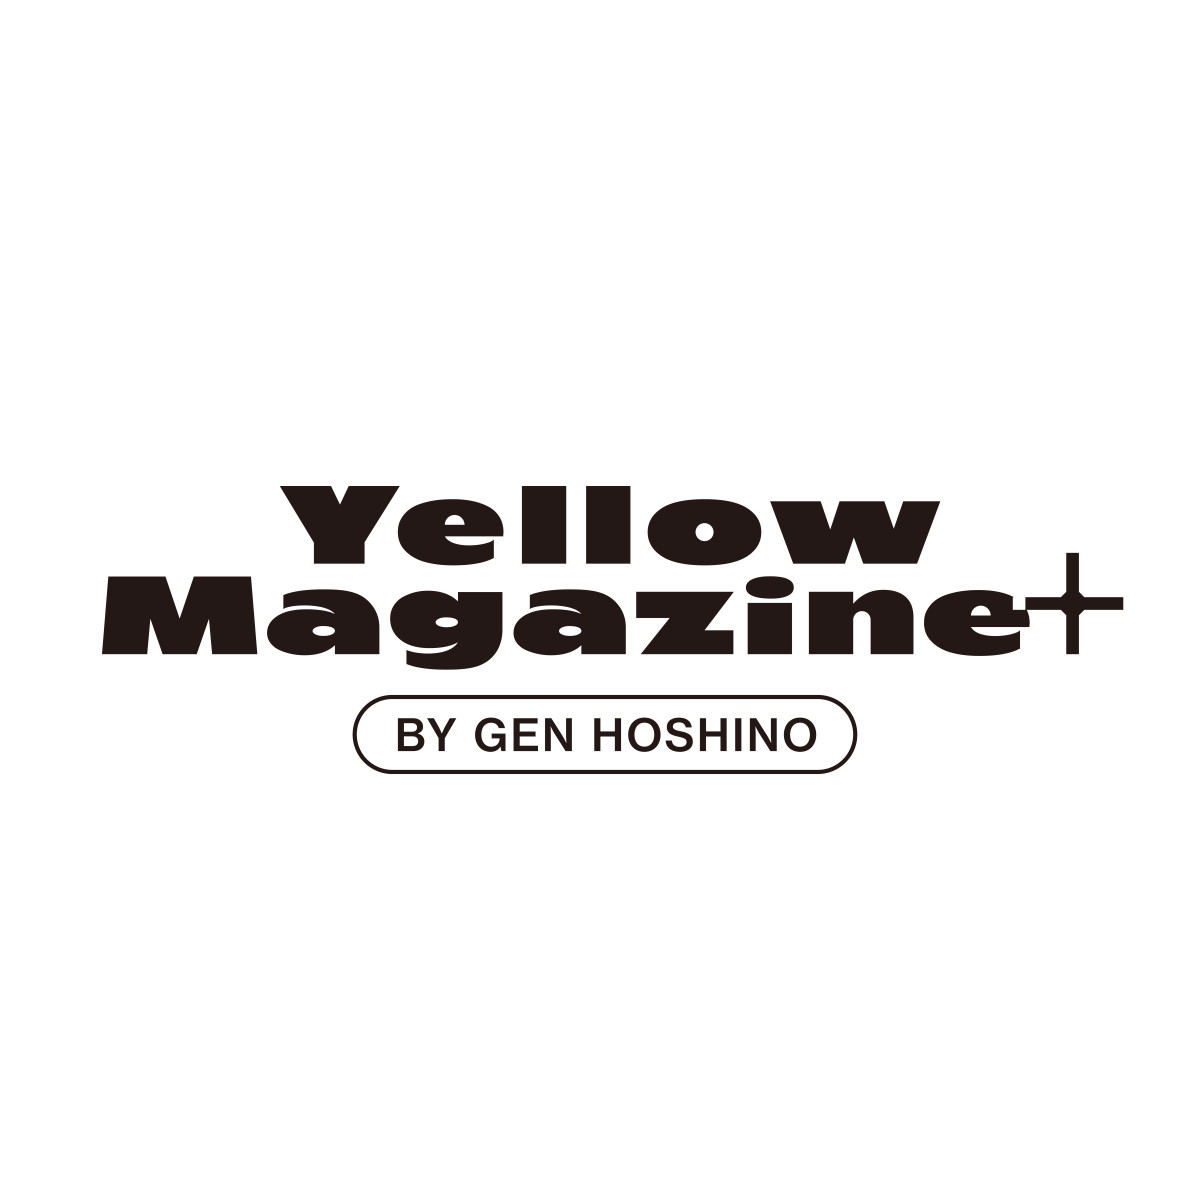 Yellow Pass Live Streaming 宴会 オリジナルグッズ 全ラインナップを公開 星野源 オフィシャルサイト